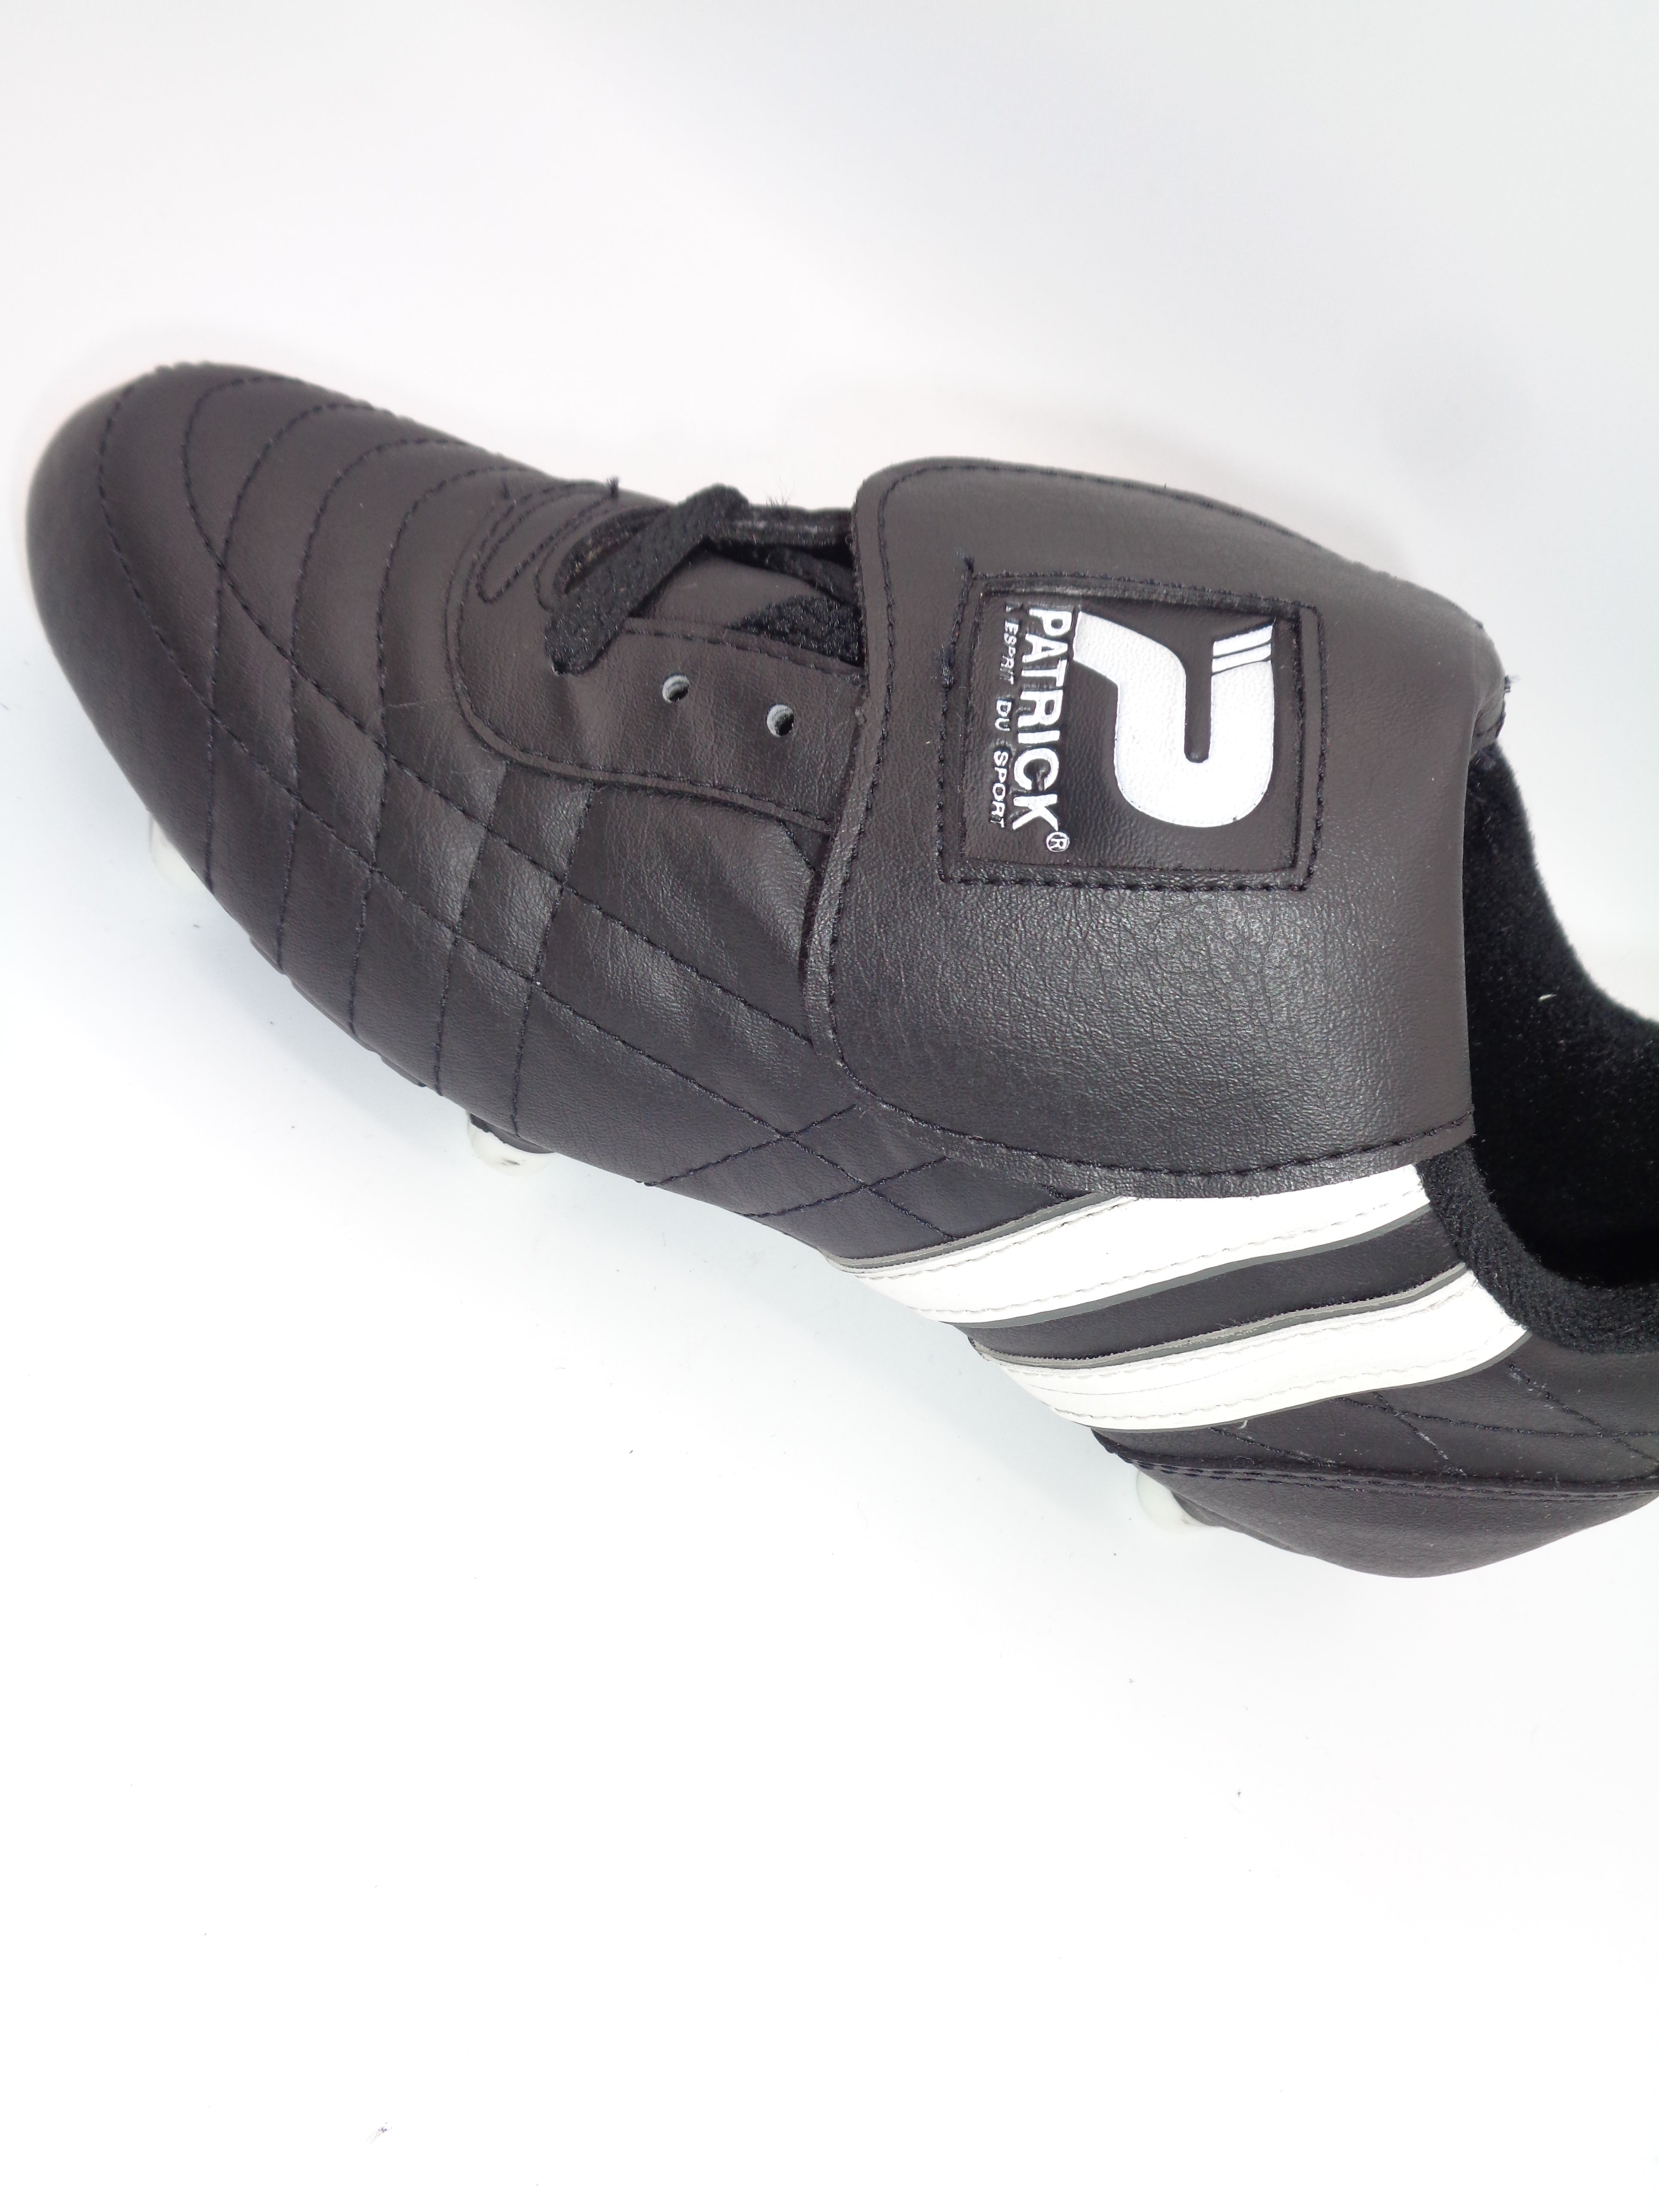 PATRICK CLASSIC BLACK WHITE FOOTBALL BOOTS - PATRICK - SIZE 5